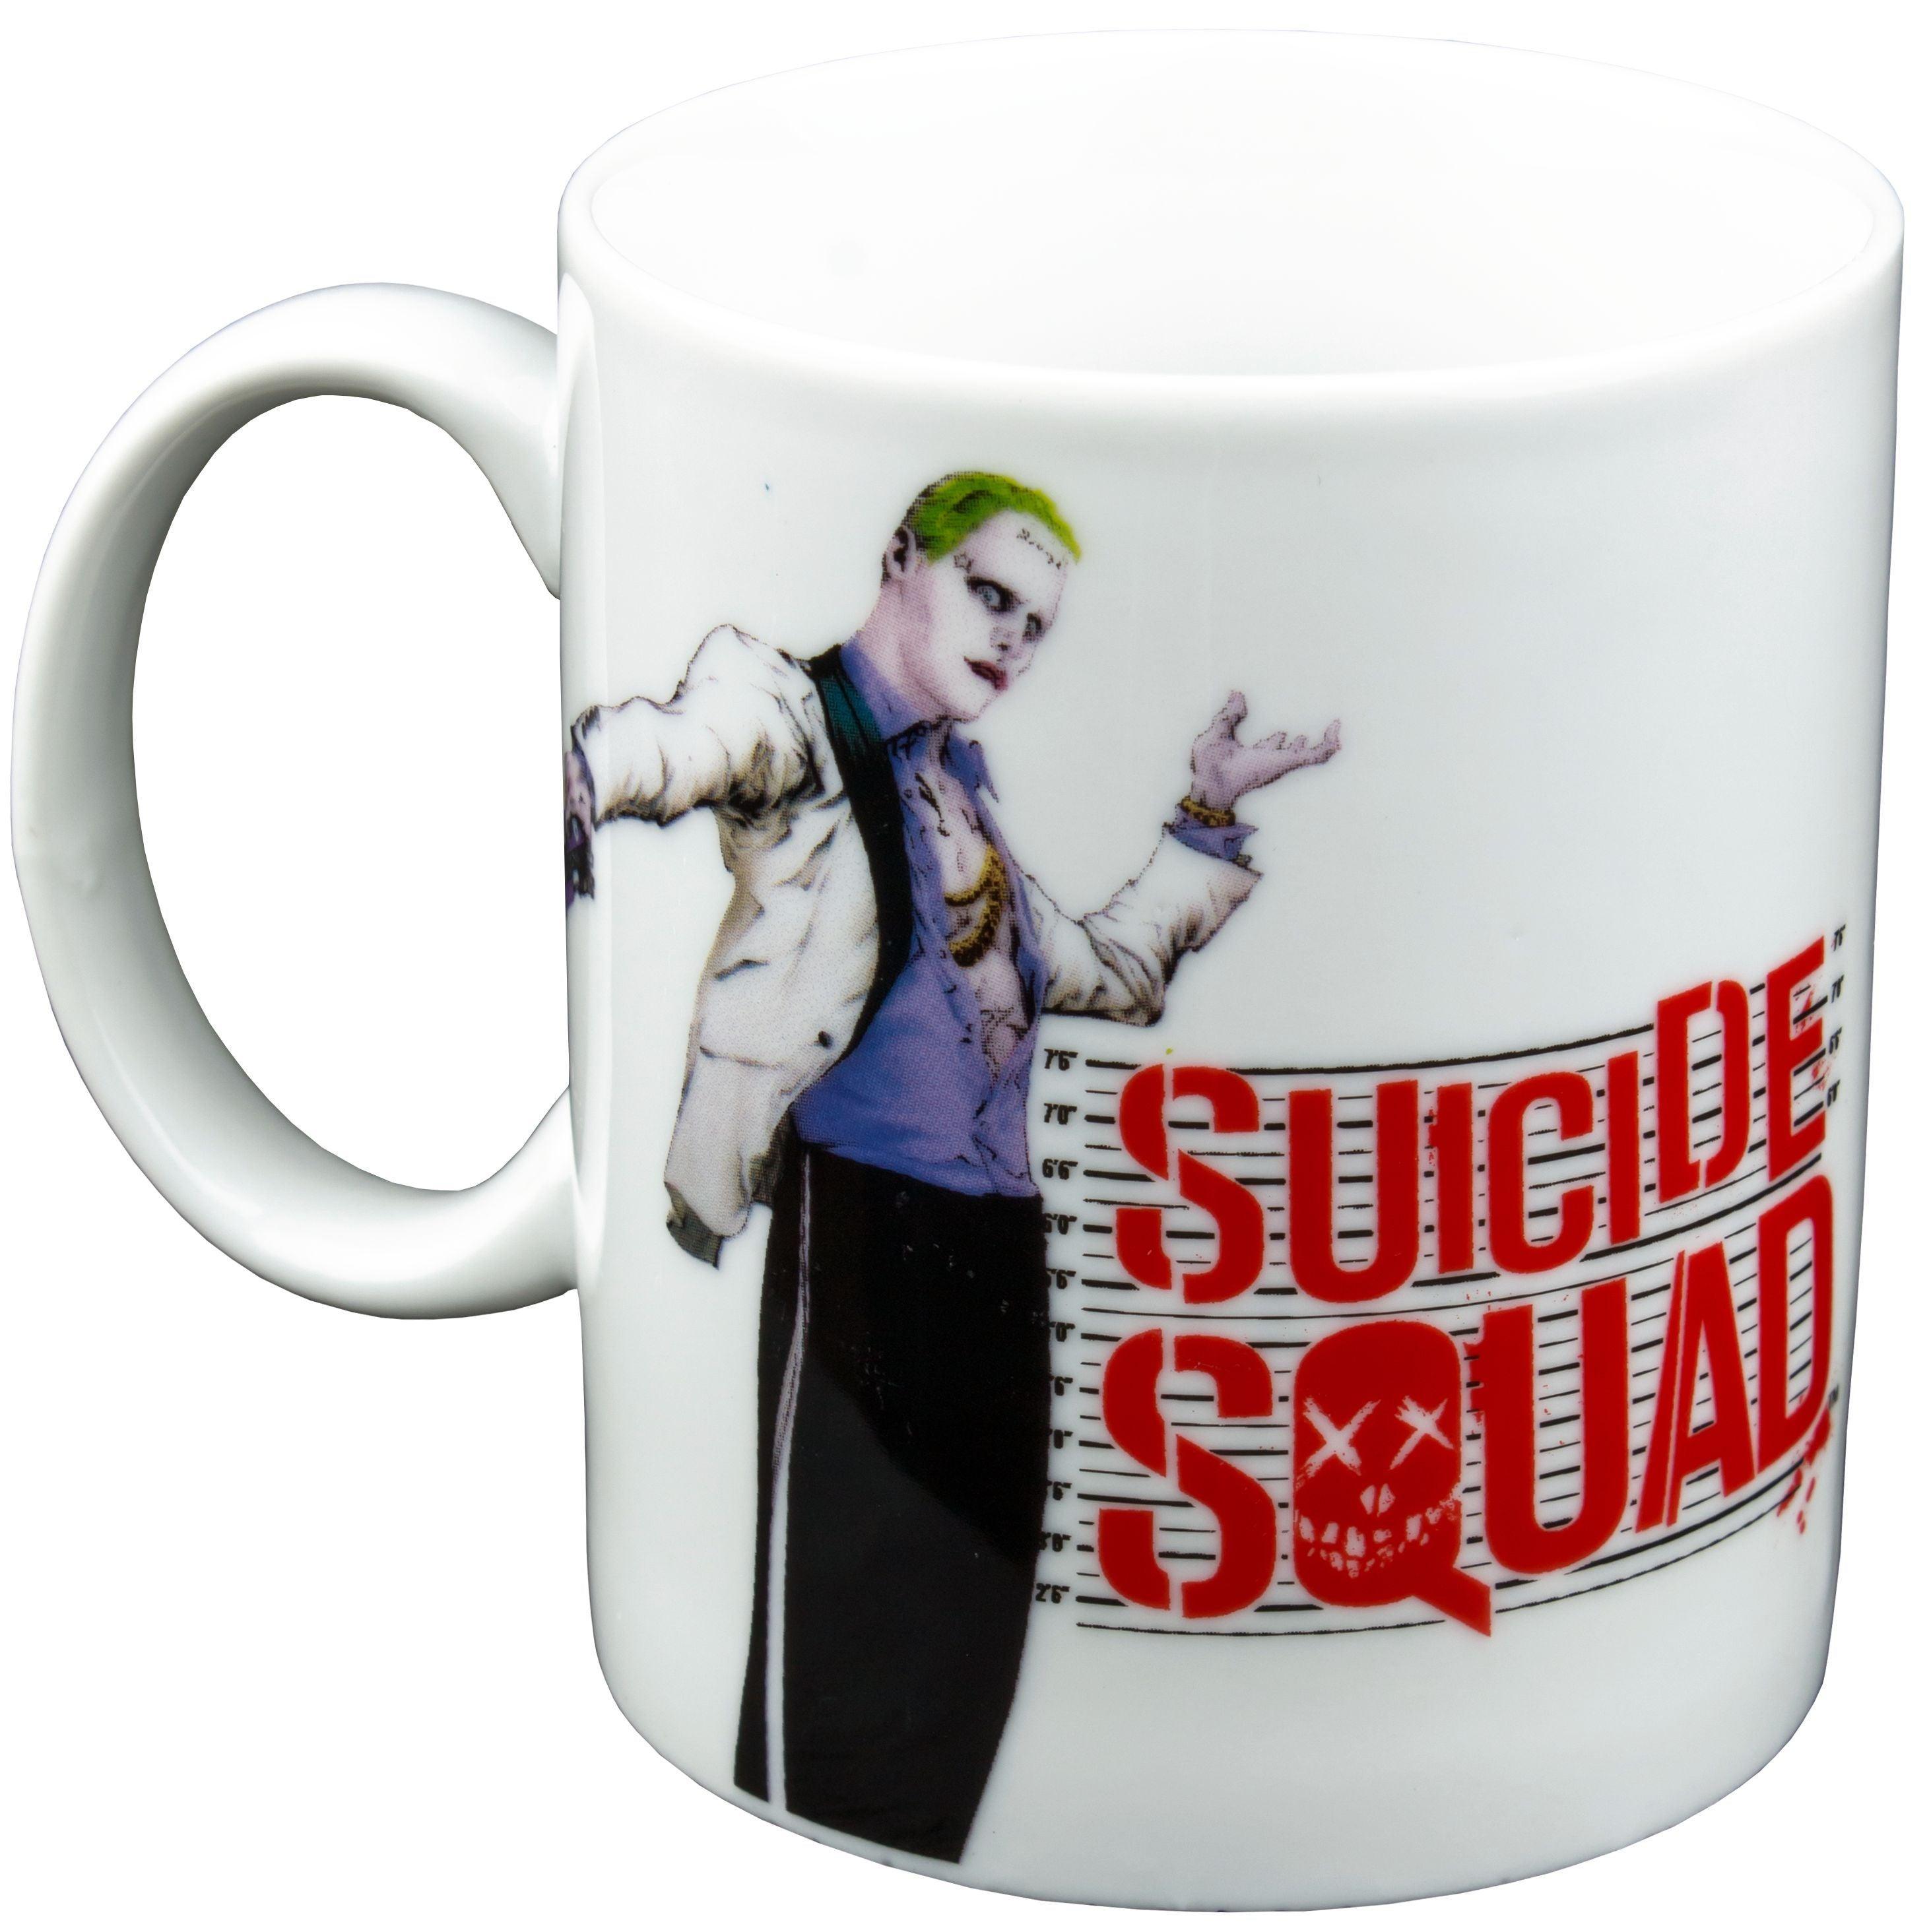 IKO0902 Suicide Squad - Joker Mug - Ikon Collectables - Titan Pop Culture